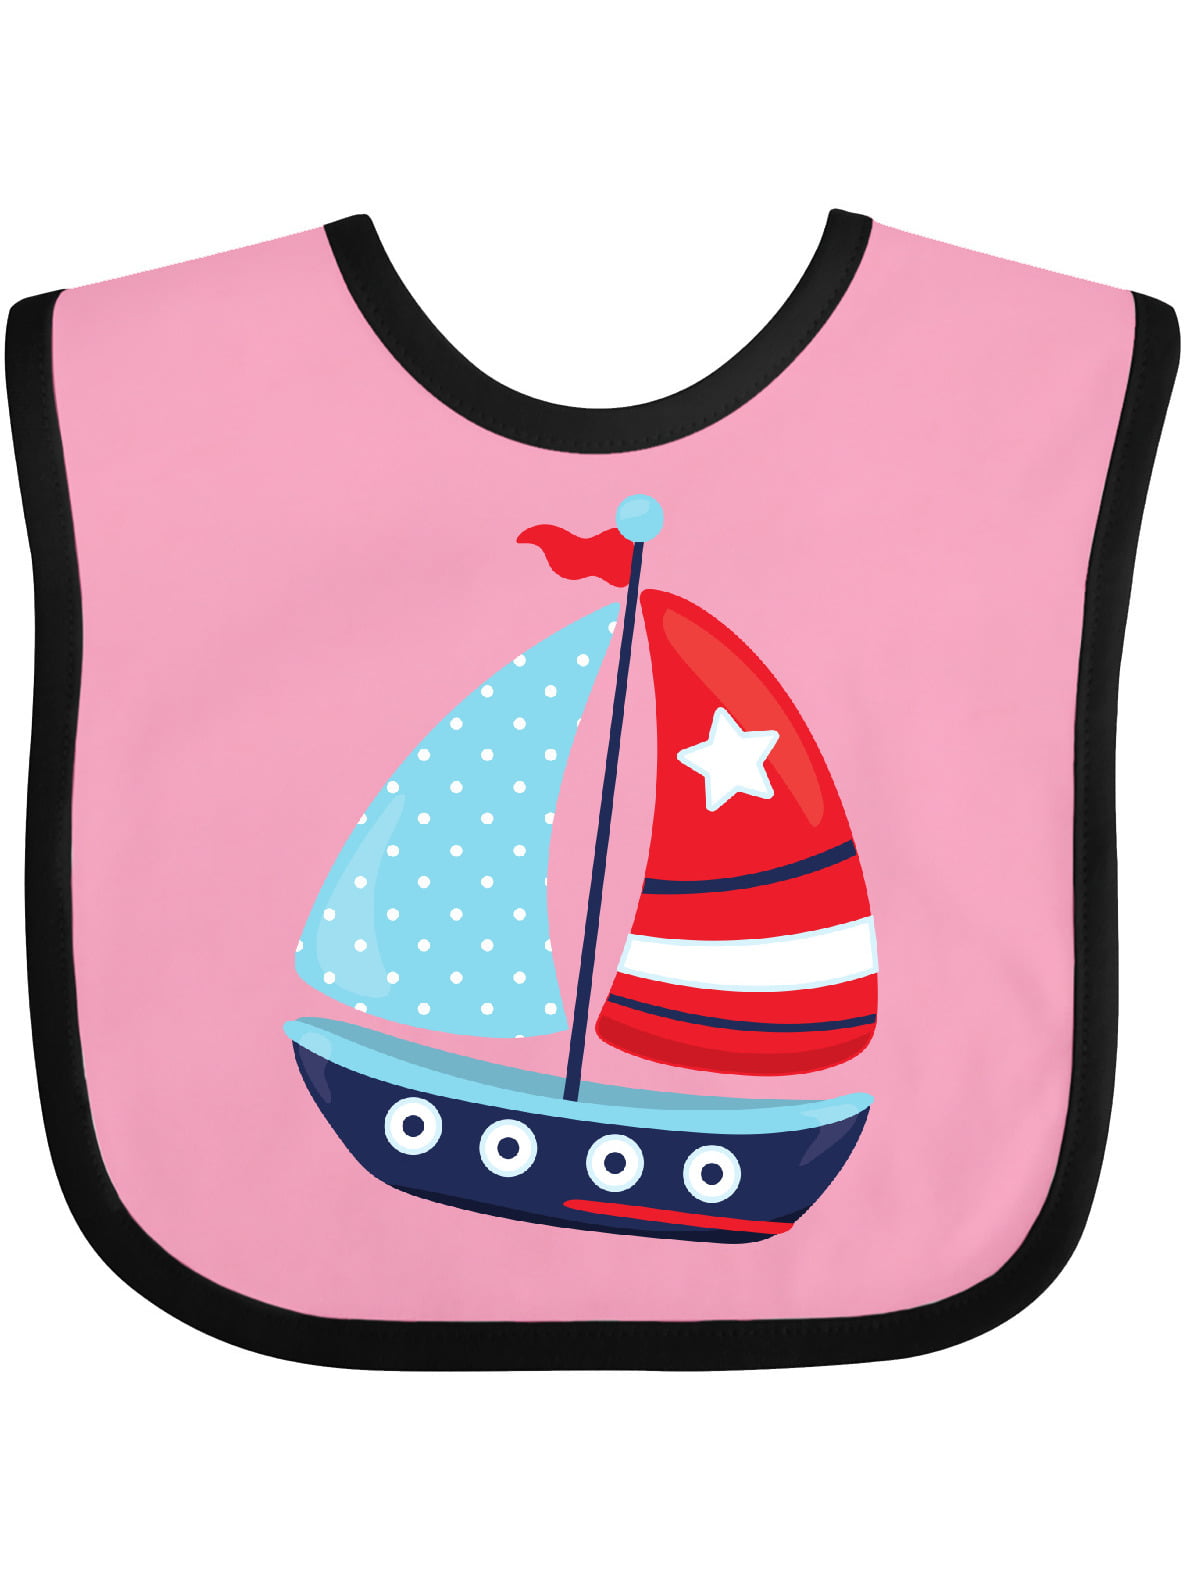 Ships Ahoy MUSICAL SAILING BOAT Gift Flashing Light Music Boat Boy Toddler Toy 